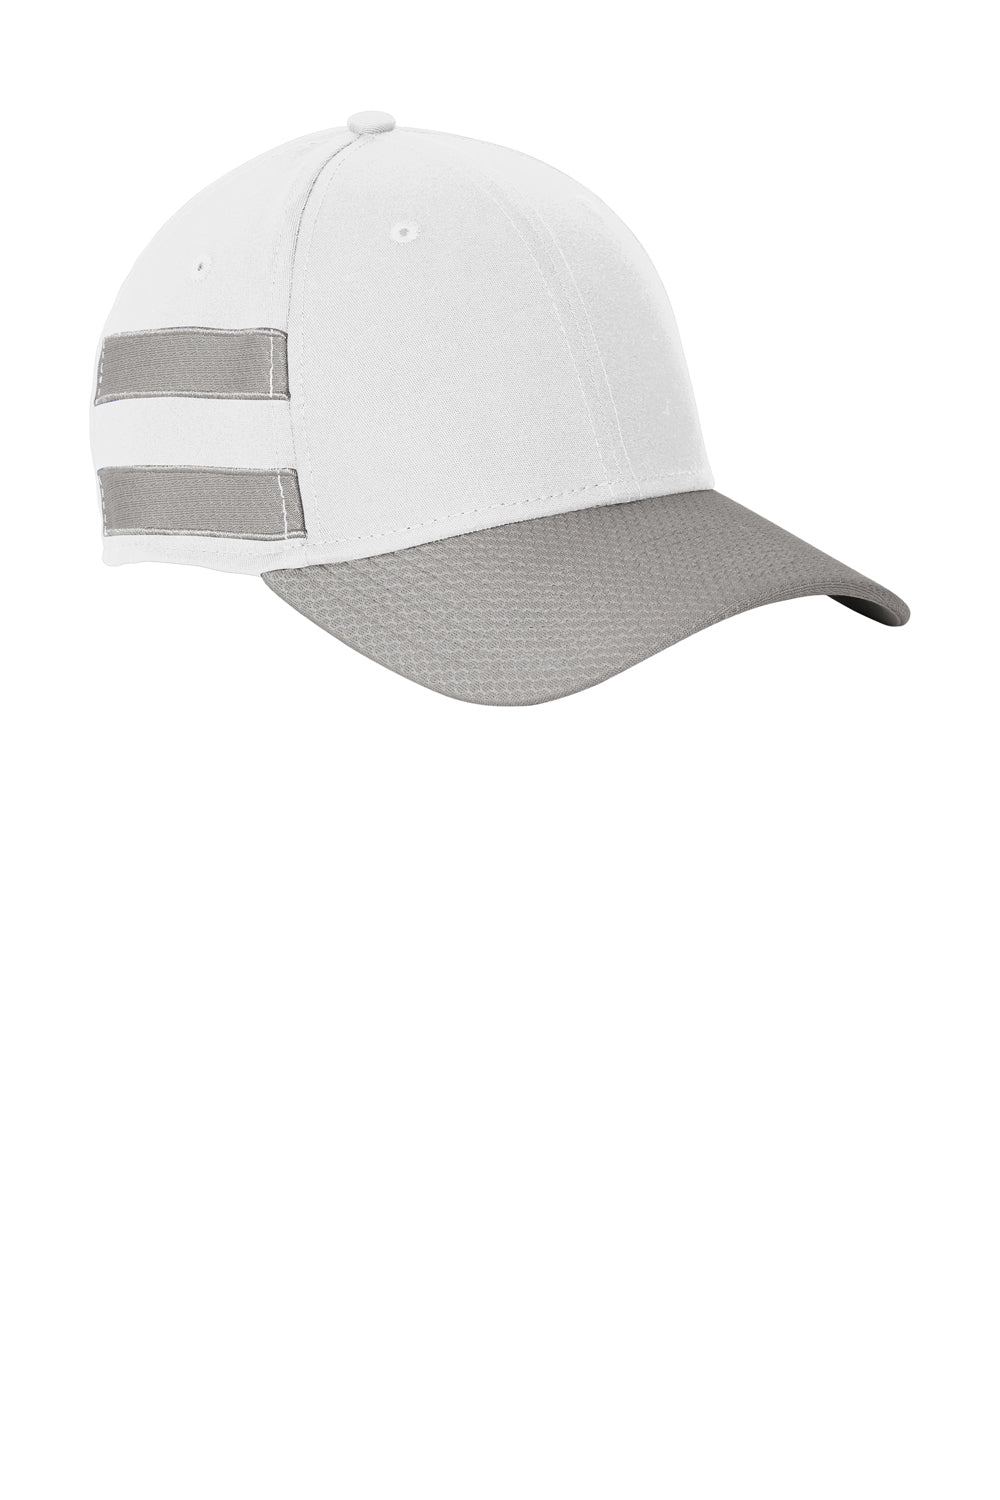 New Era NE1122 Striped Stretch Fit Hat White/Grey Back